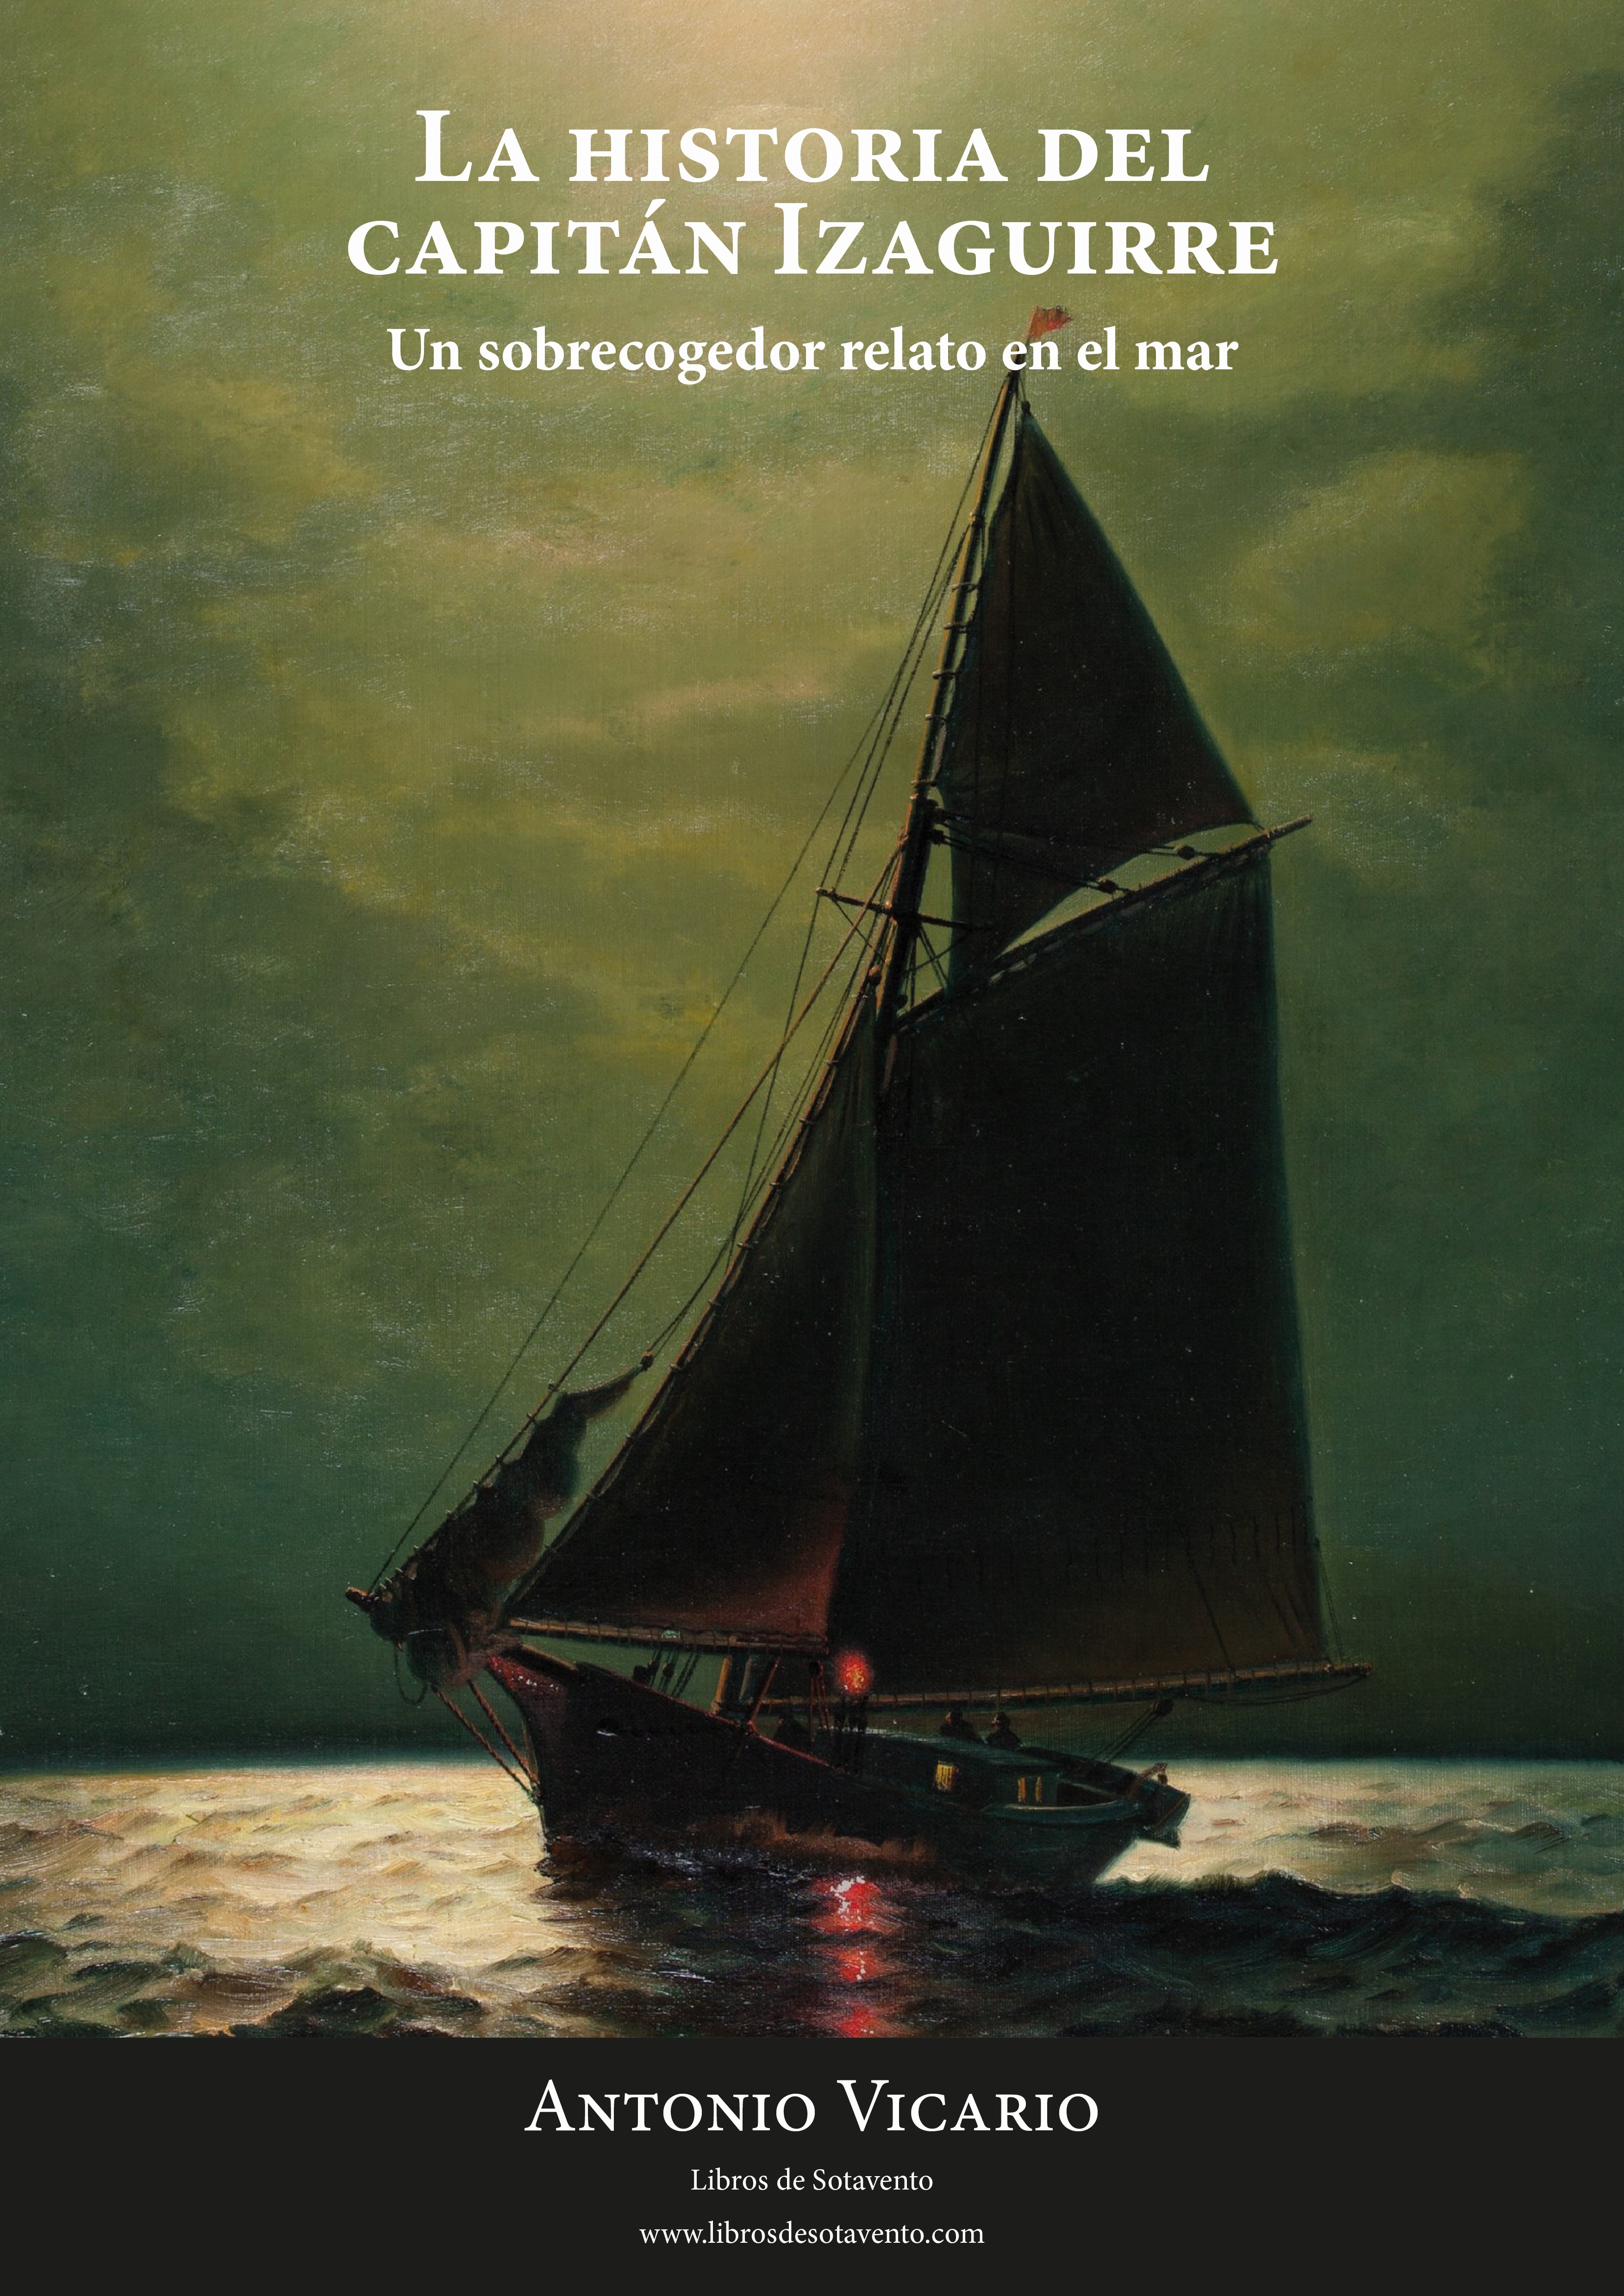 La historia del capitan Izaguirre "Un sobrecogedor relato en el mar"